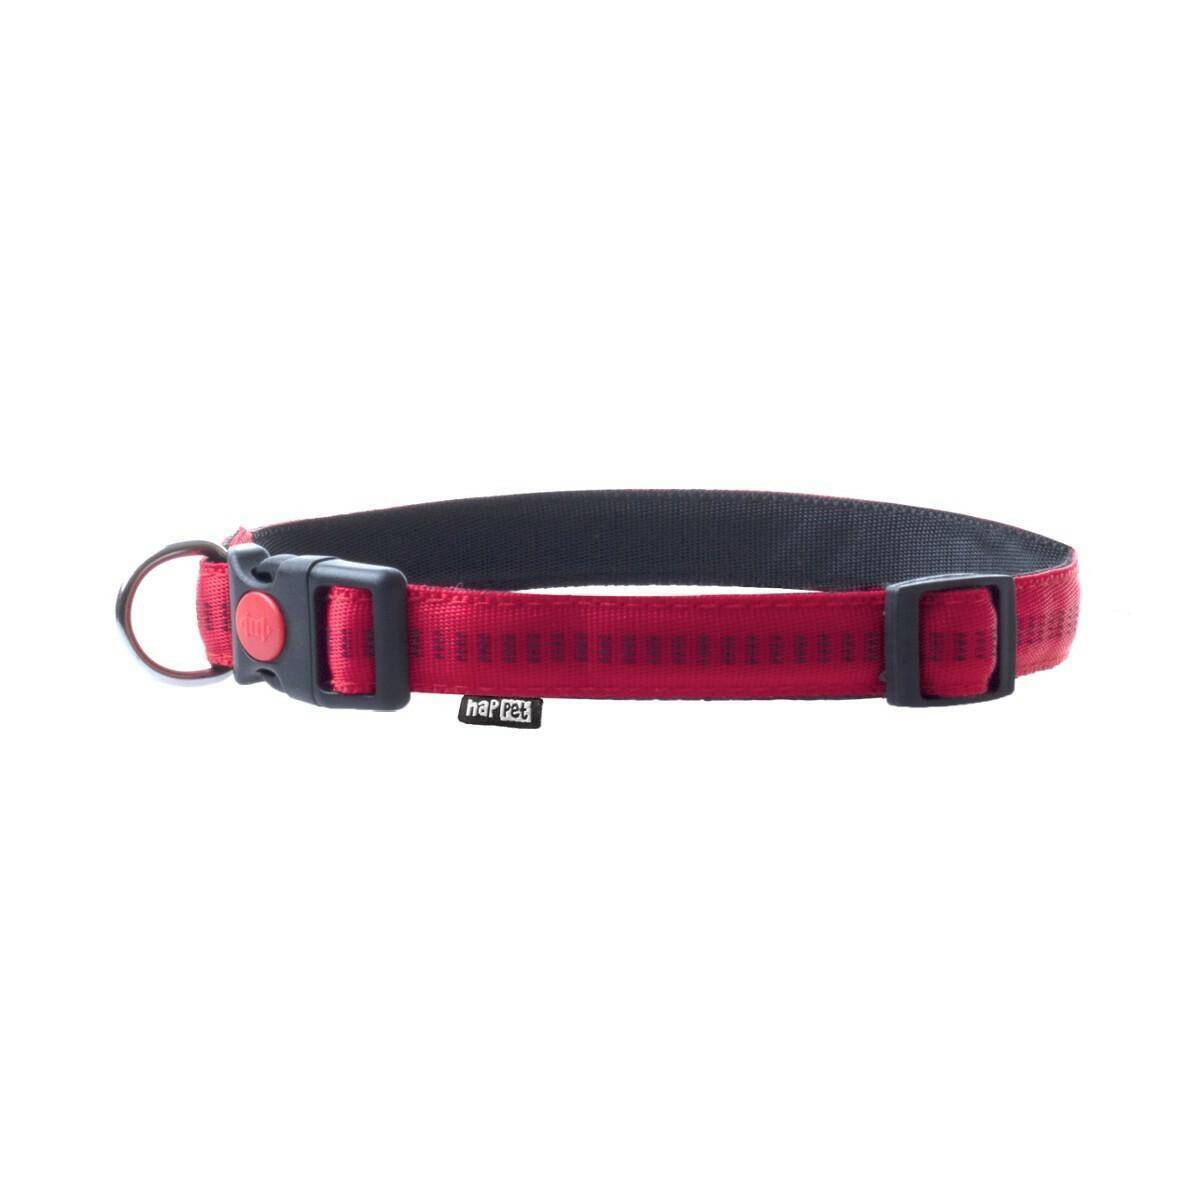 Collar L / Soft Style / Red - Happet JC23